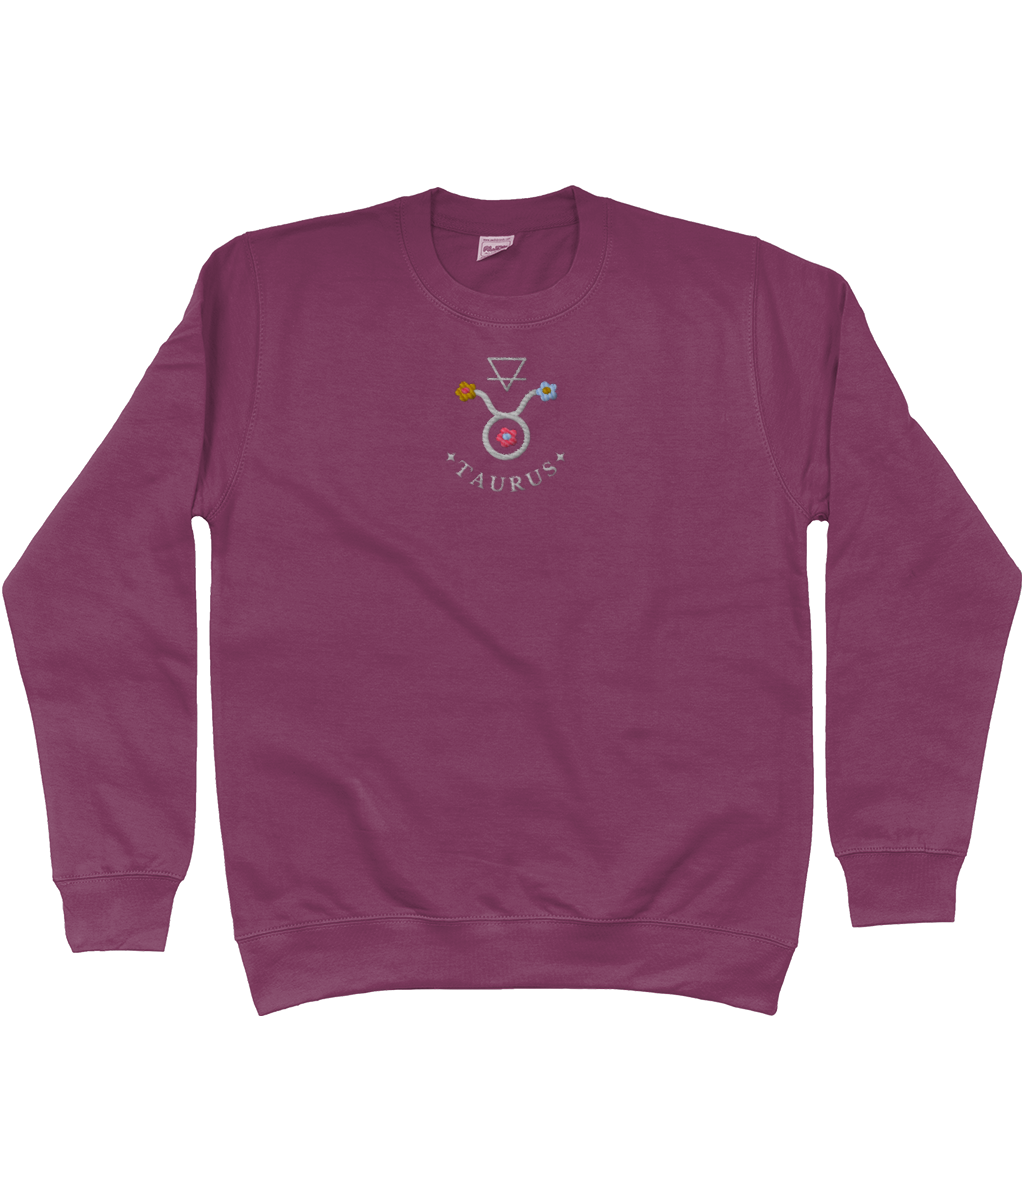 Taurus Embroidered Sweatshirt